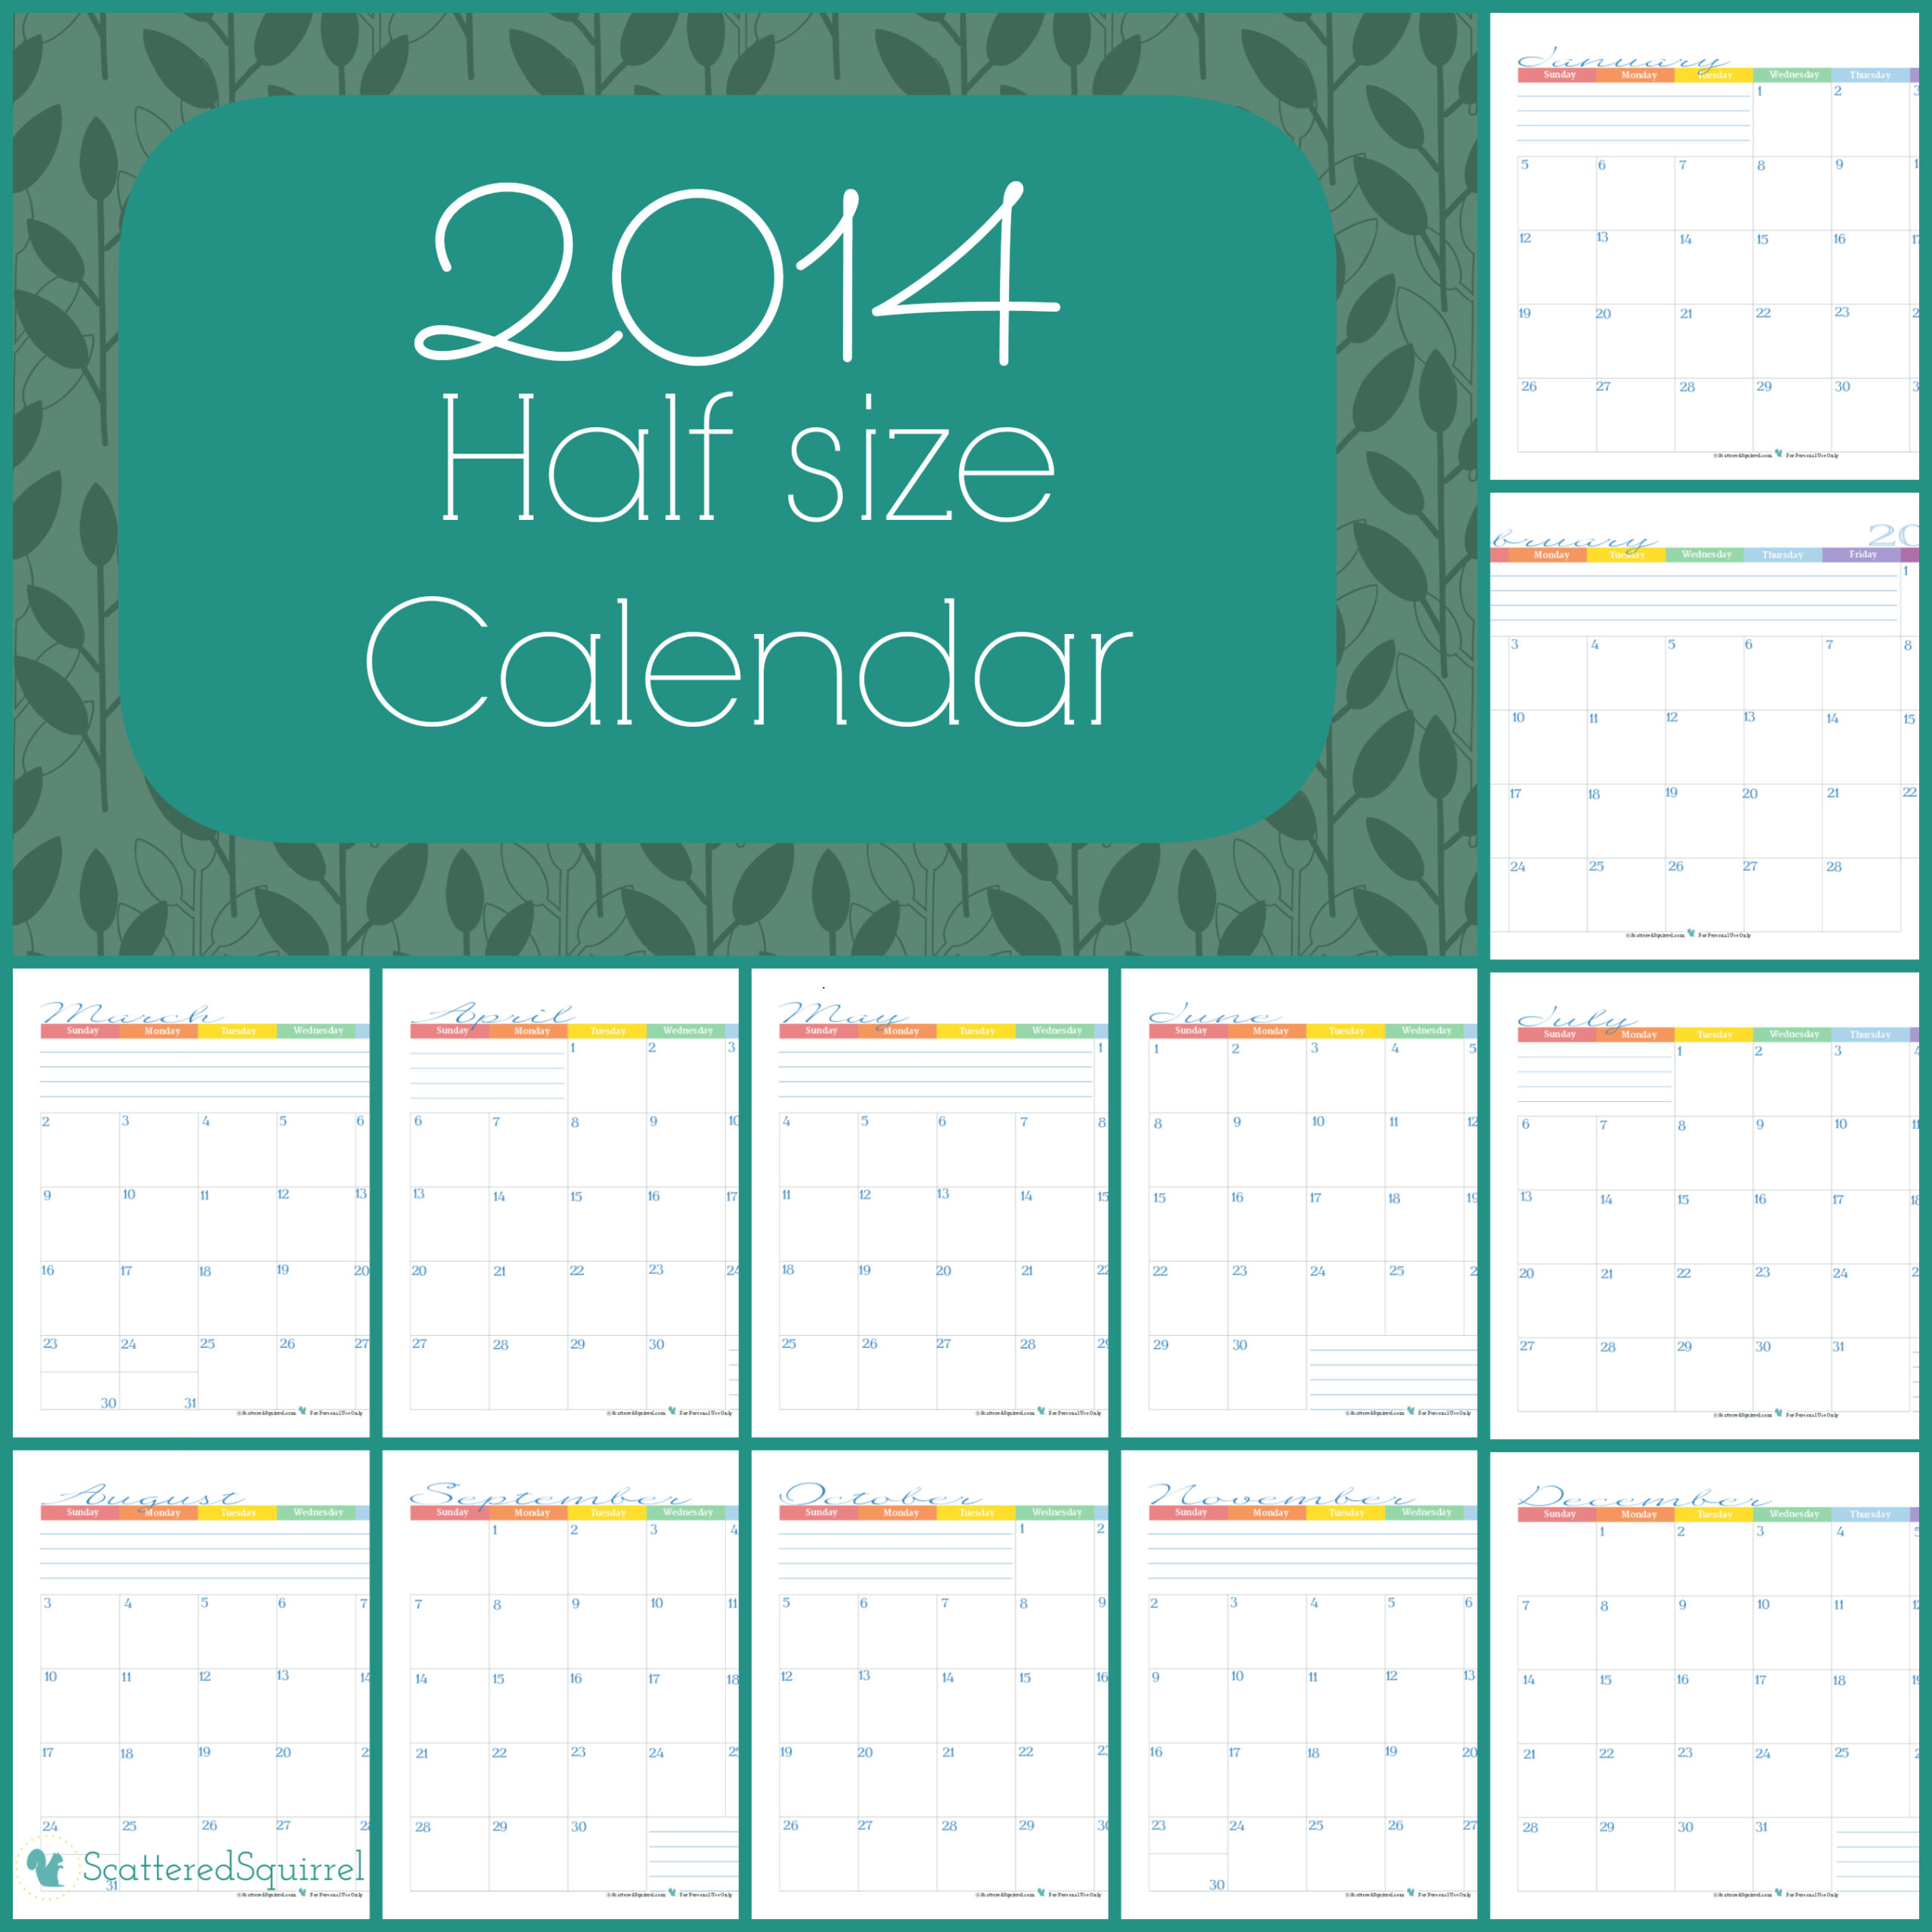 2014 Calendars Half Size Edition